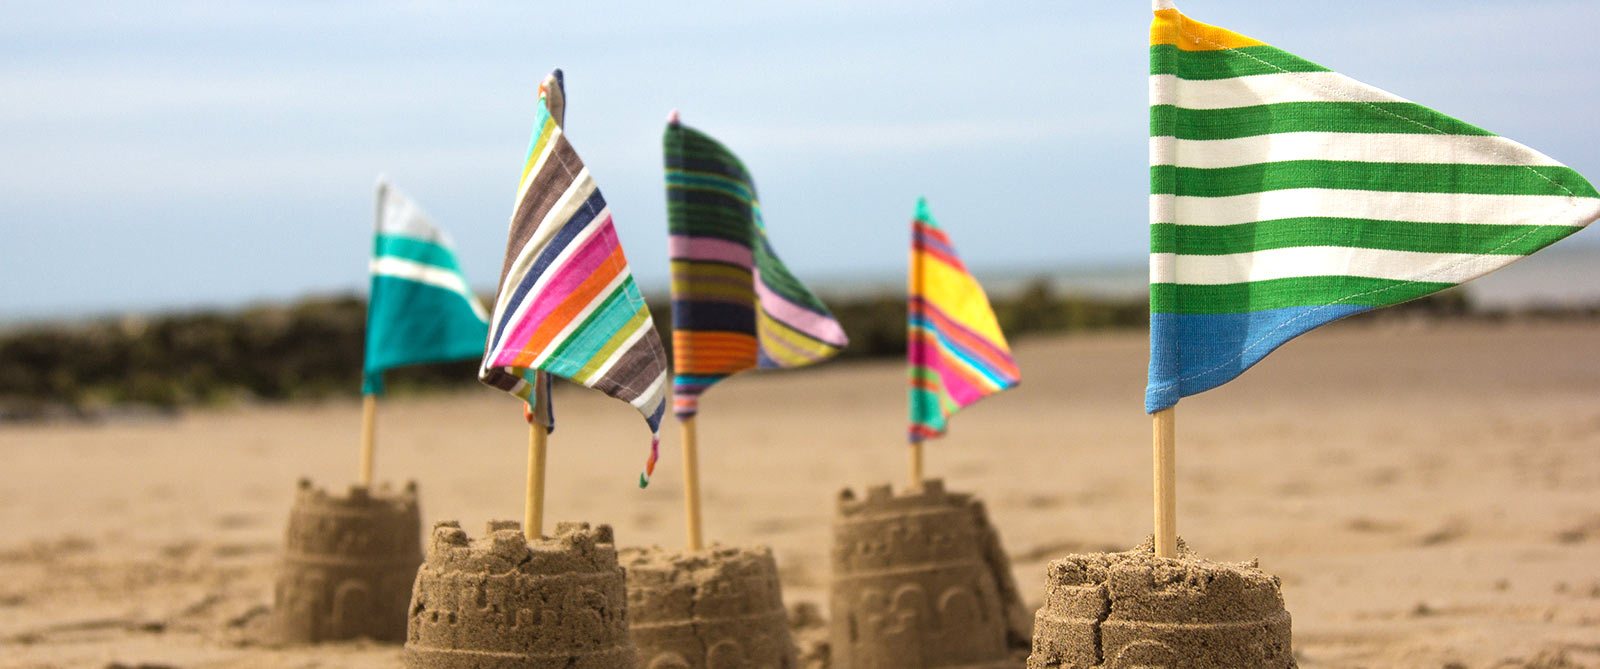 Sandcastle Flags